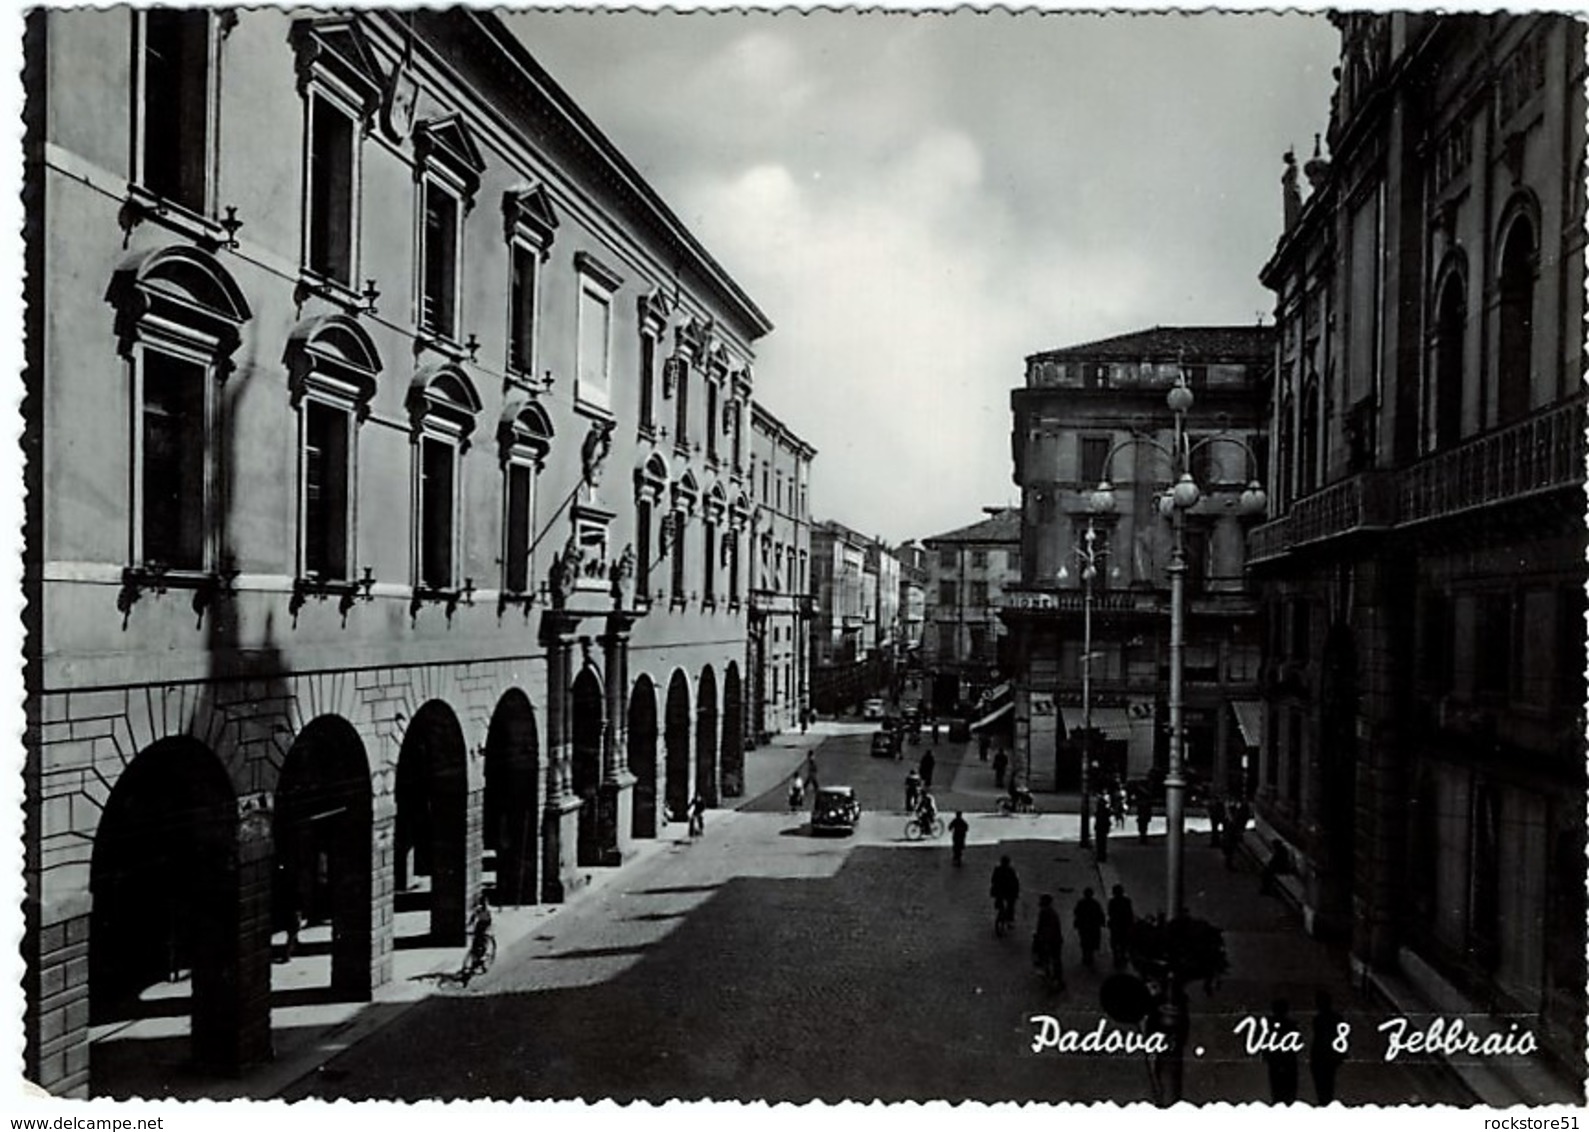 Padova - Padova (Padua)